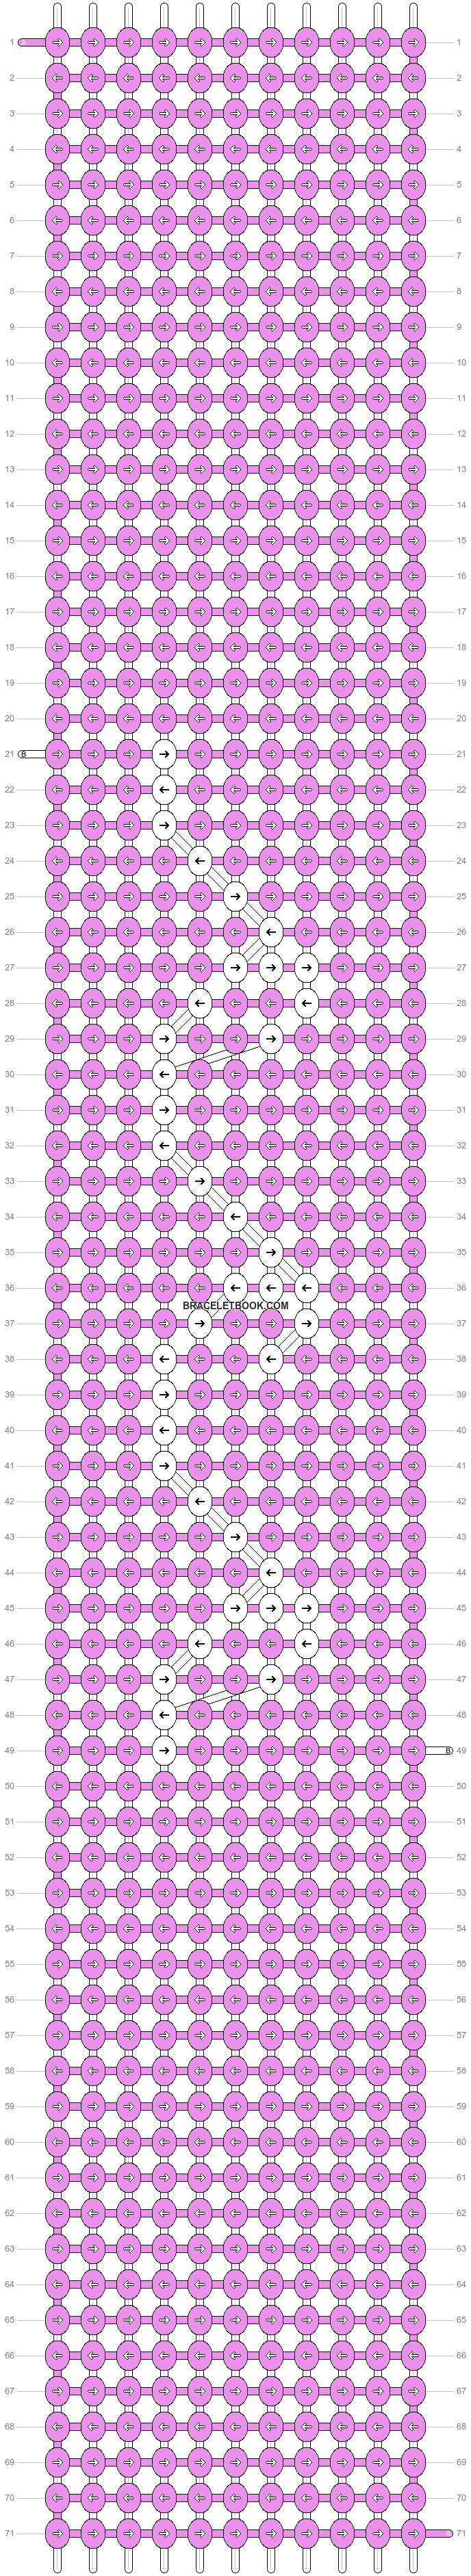 Alpha pattern #38672 variation #75960 pattern